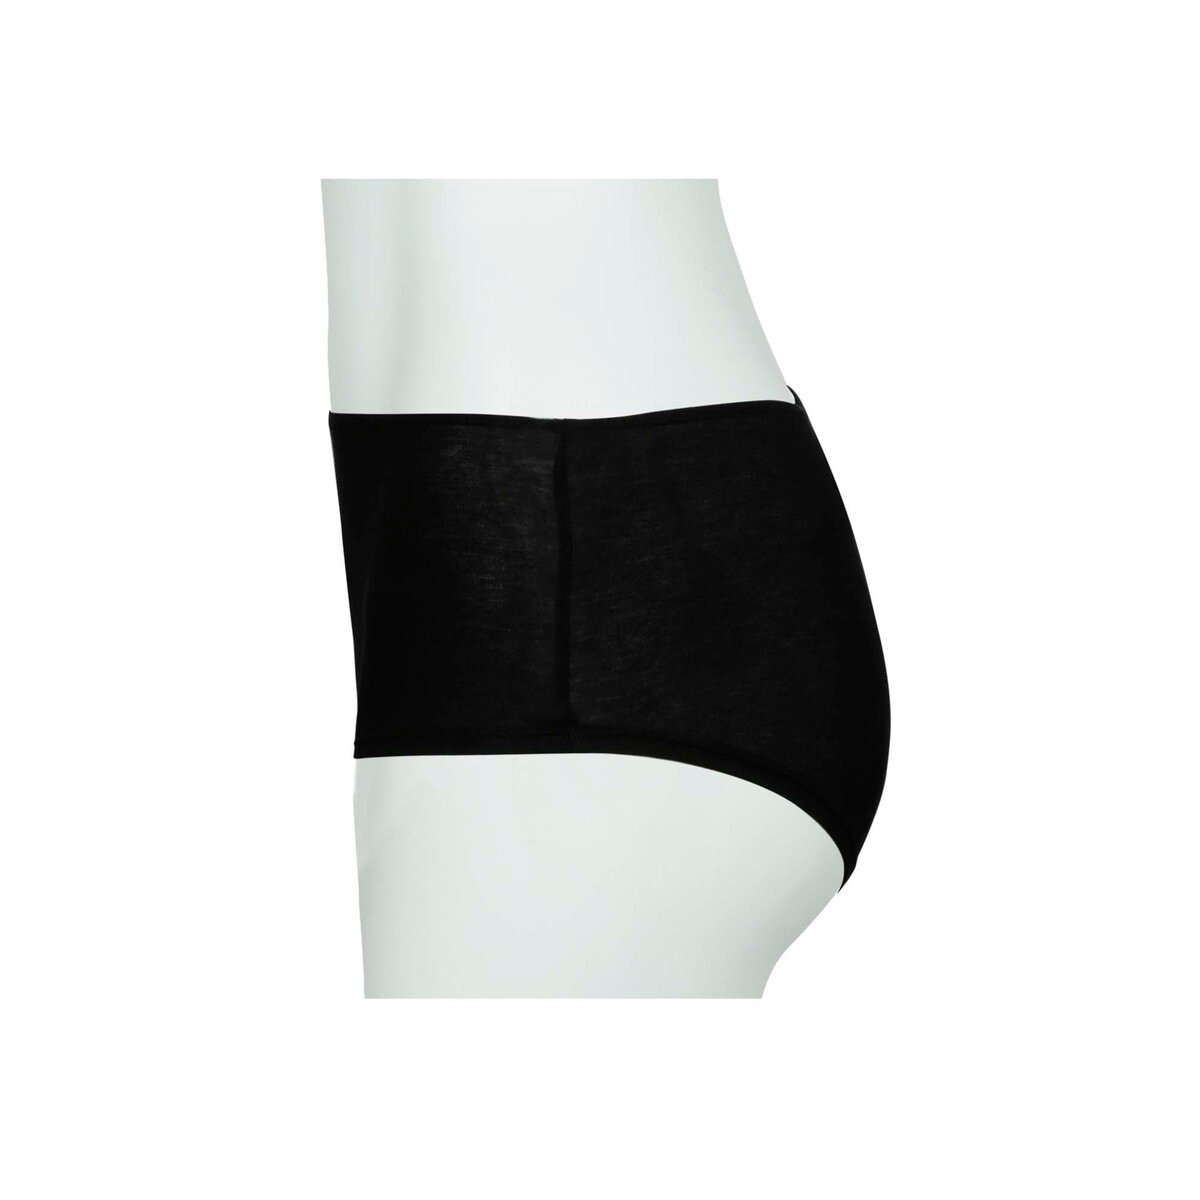 Cortigiani Women's Boyshort Panties 23-17001 Black Extra Large